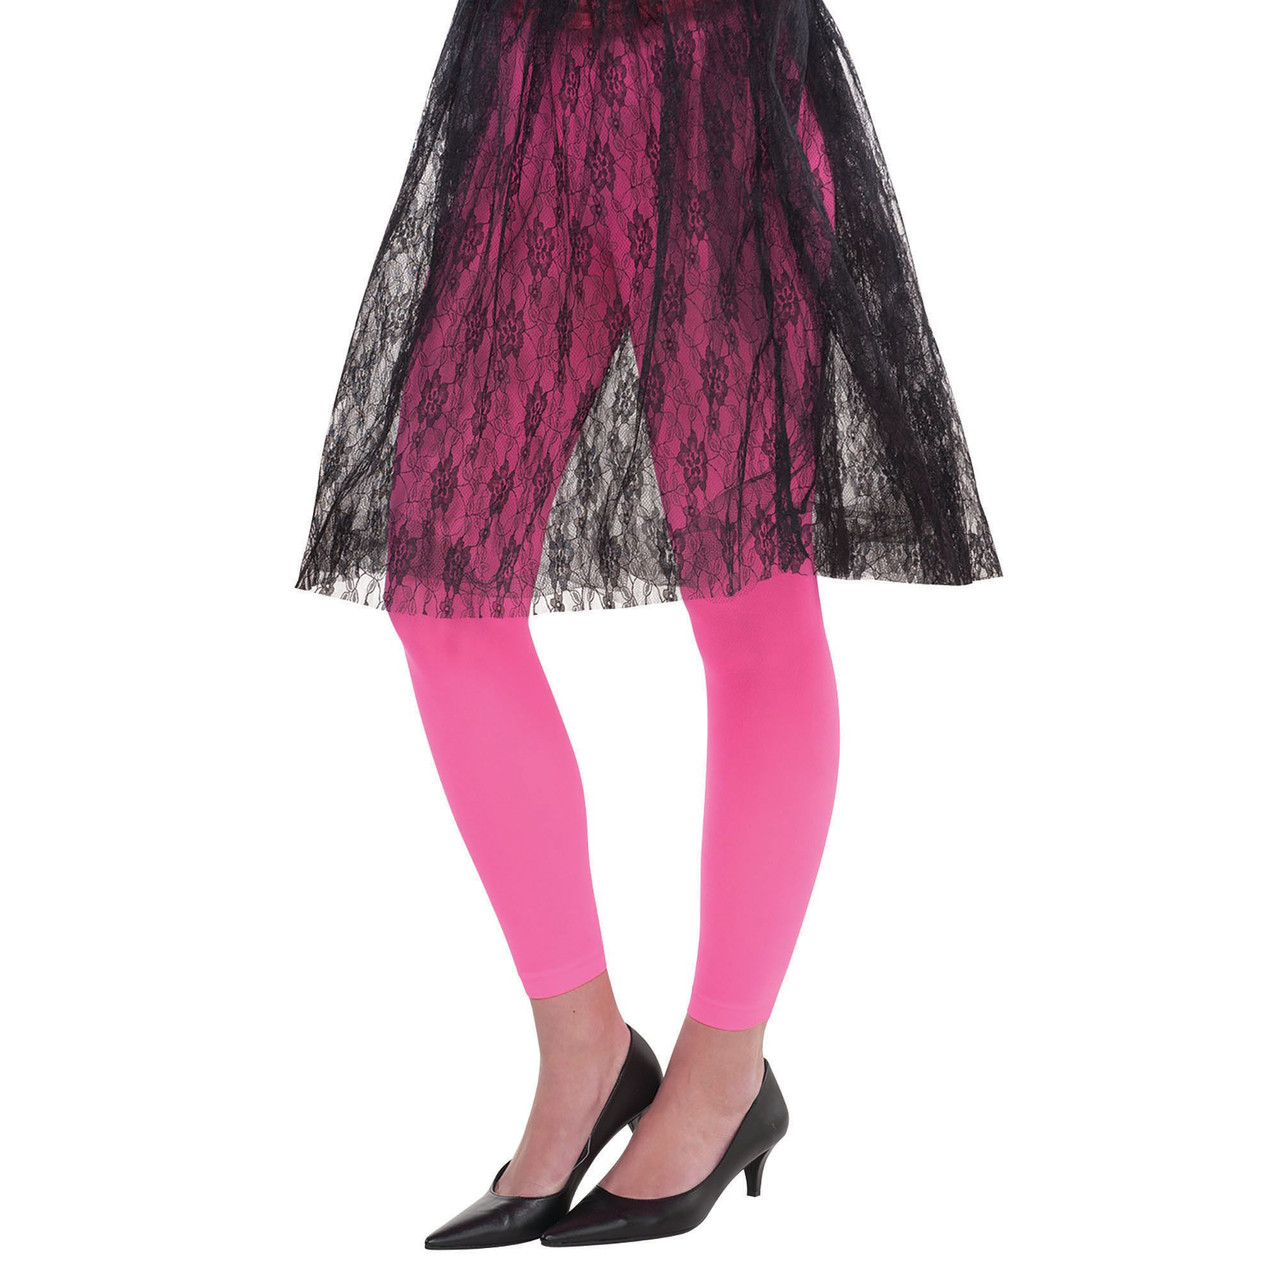 80s dress up overall dress skirt corduroy ankle boots hair make up leggings  | Beauty Chattette